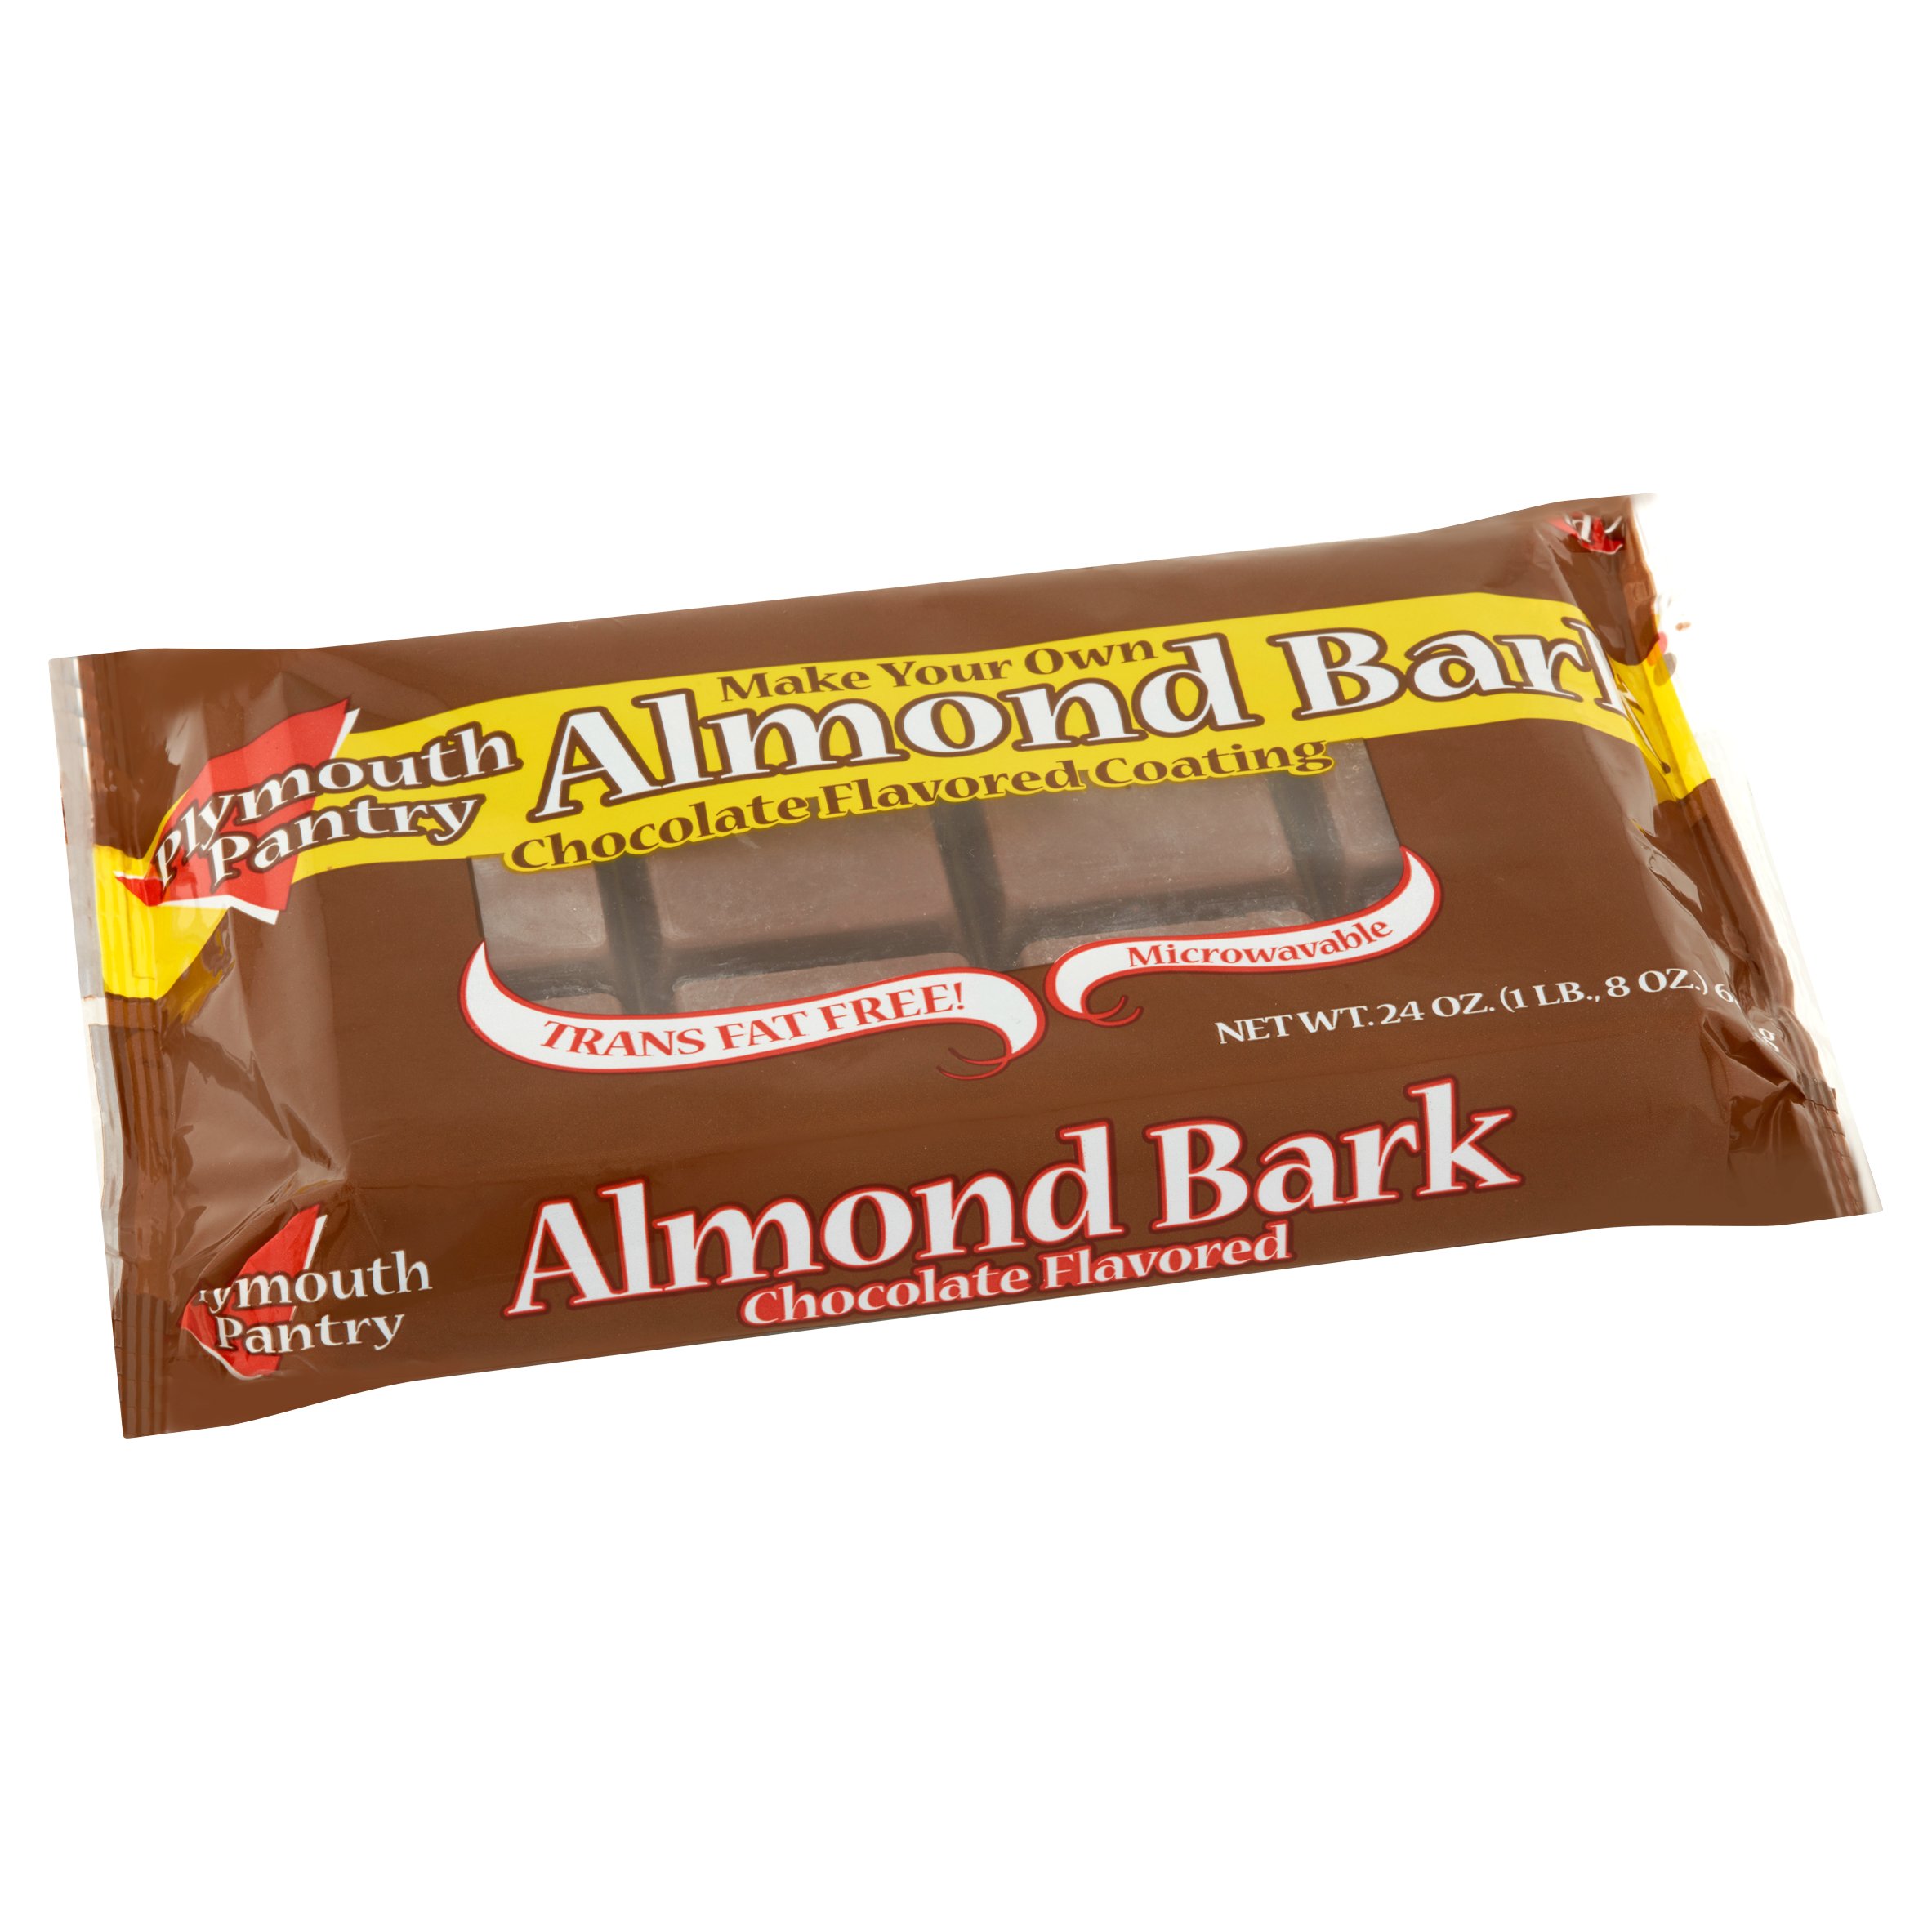 Plymouth Pantry Almond Bark Chocolate Baking Bar, 24 oz - image 2 of 5